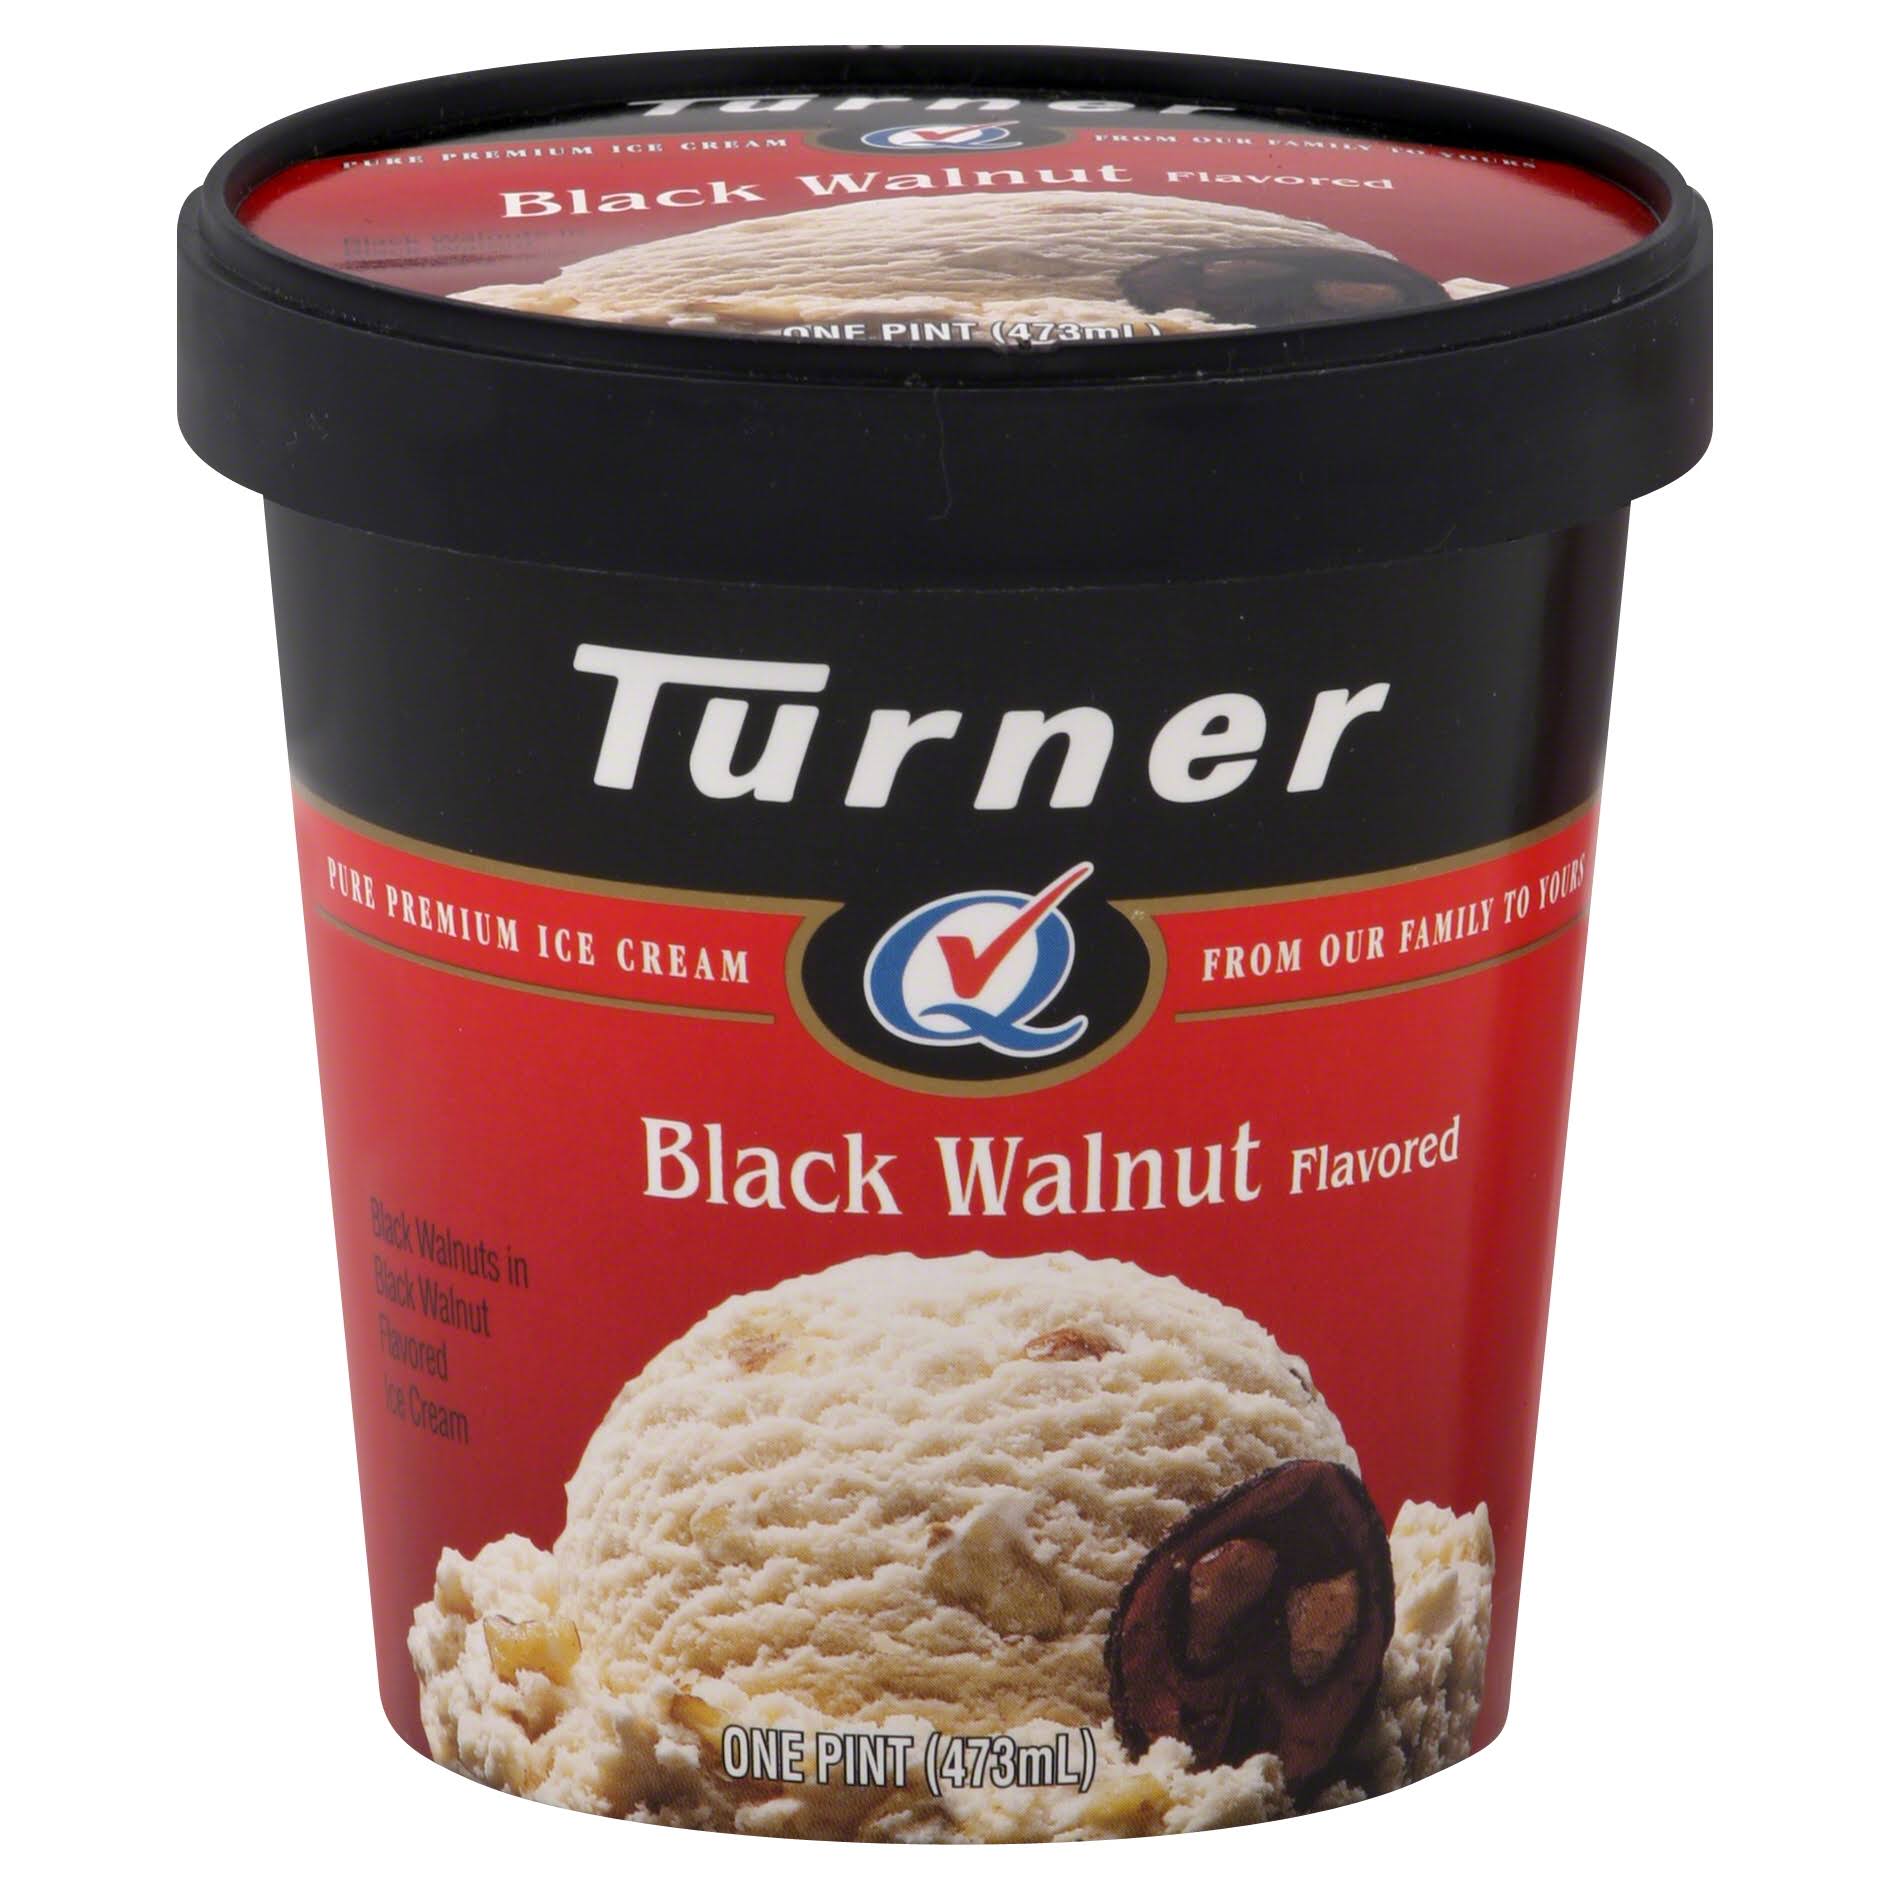 Turner Ice Cream, Black Walnut Flavored - 1 pt